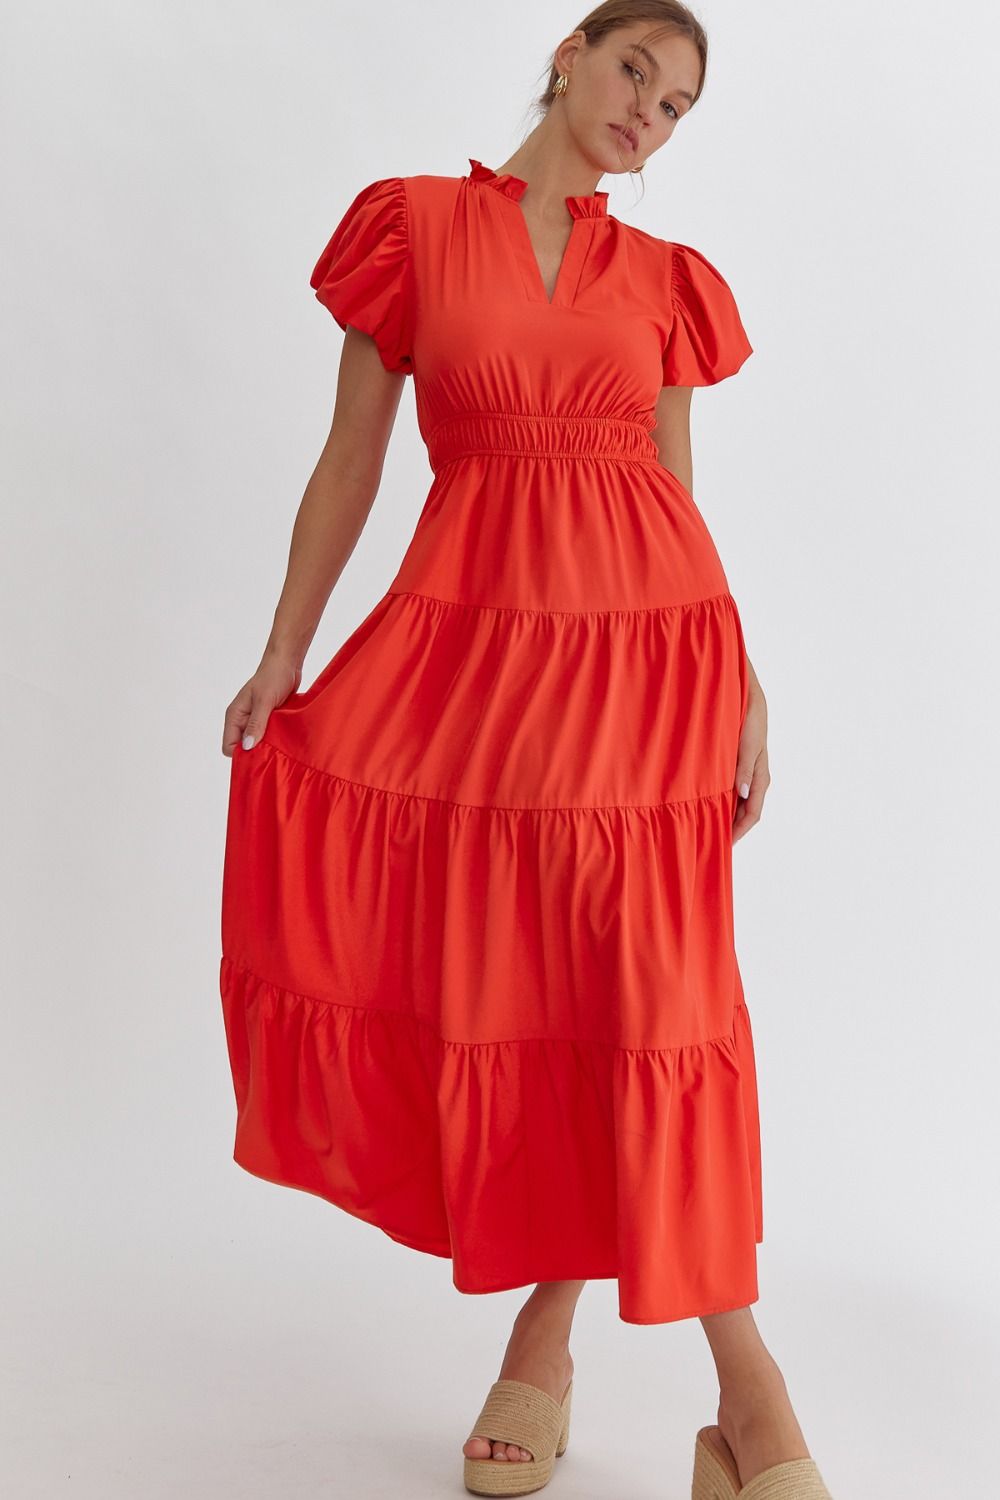 ENTRO INC Women's Dresses RED / S V-Neck Bubble Sleeve Tiered Midi Dress || David's Clothing D20735